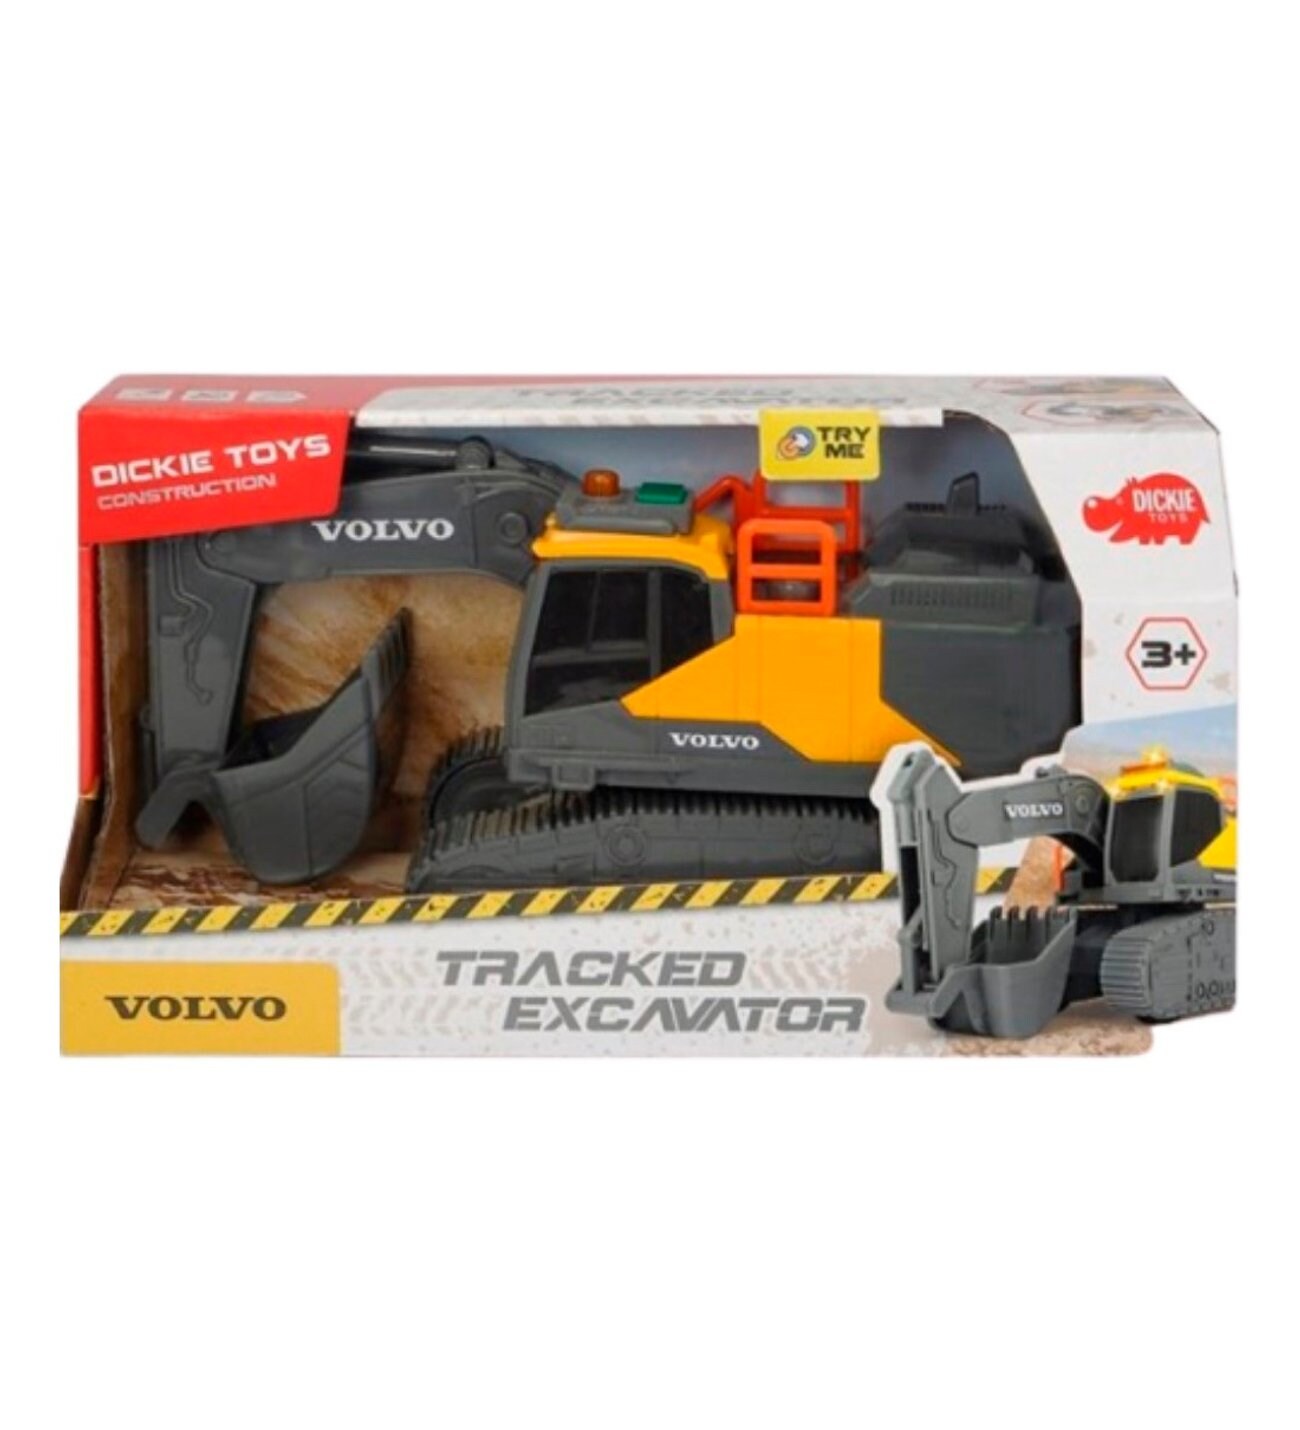 dickie-toys-volvo-tracked-excavator-203723005-kcm32678997-1-f2fa4daa51074a539b78653a27f9962a